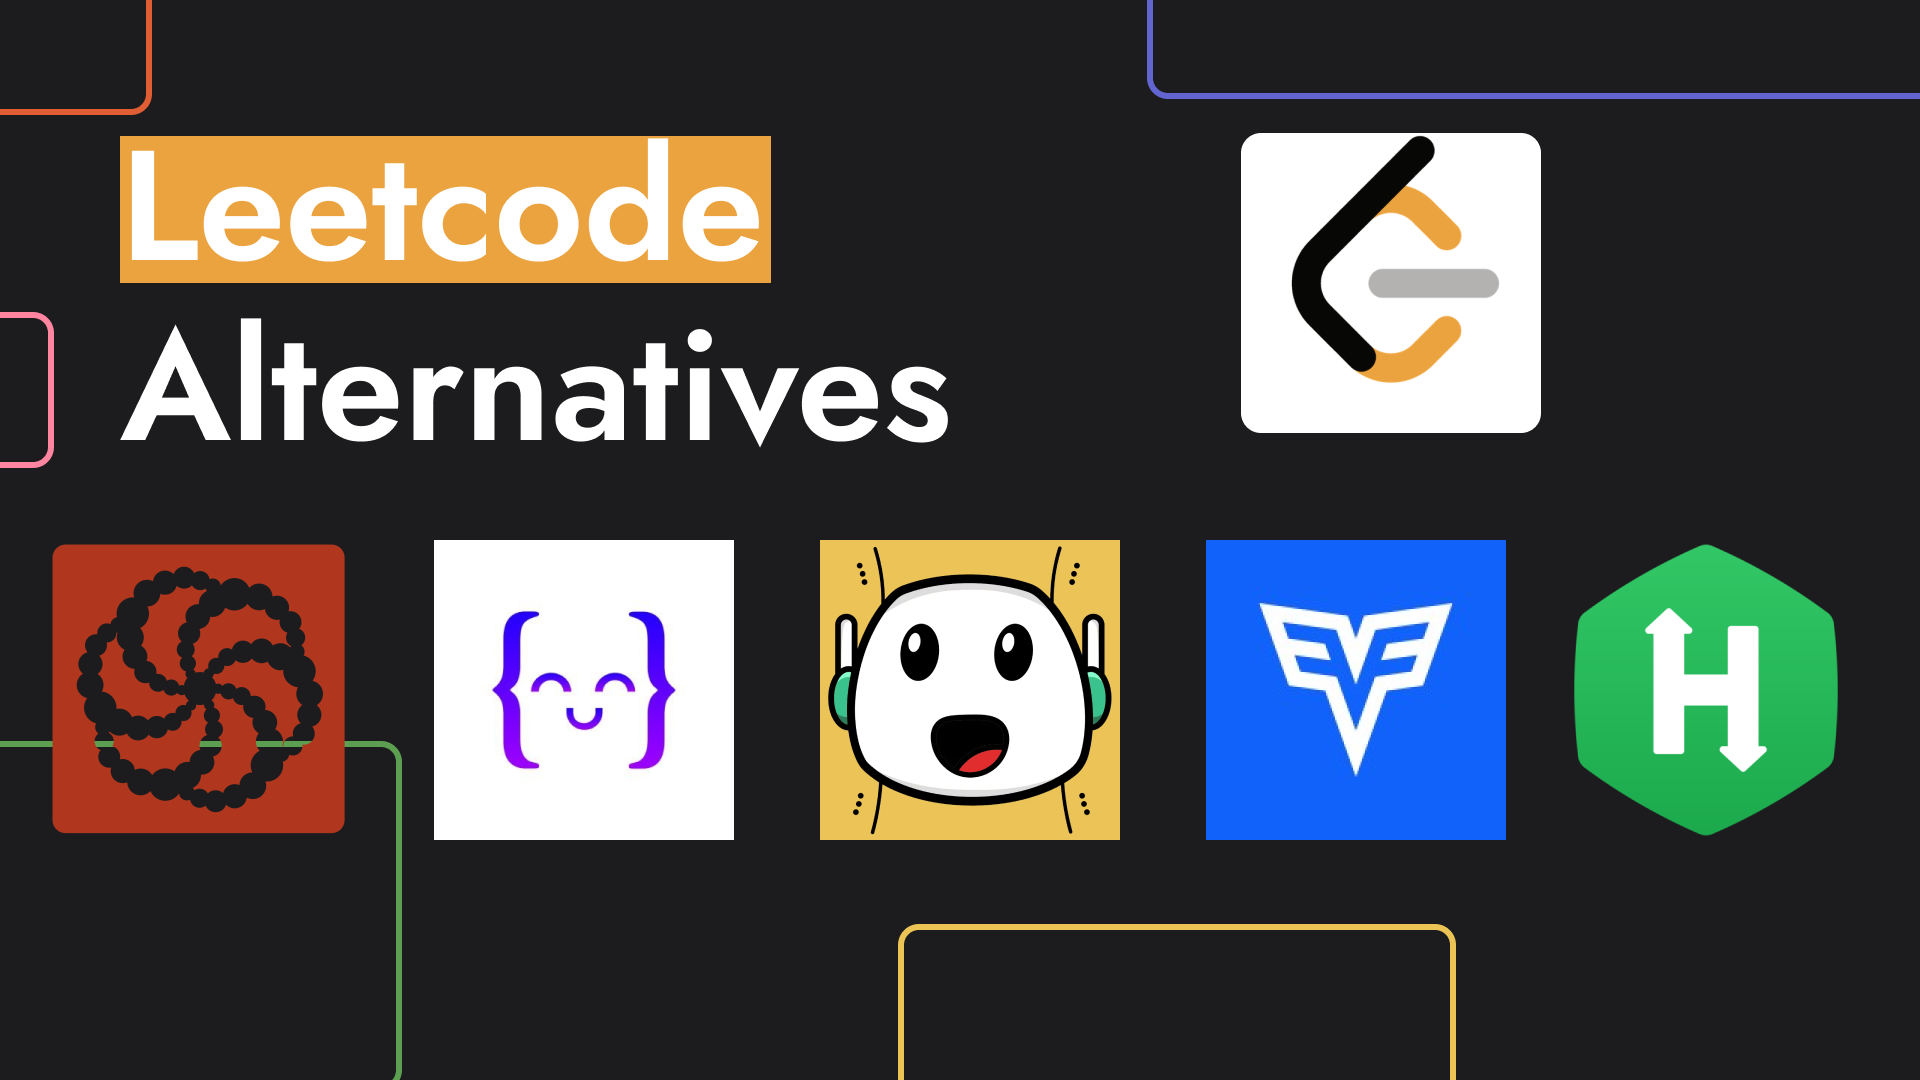 Leetcode Alternatives